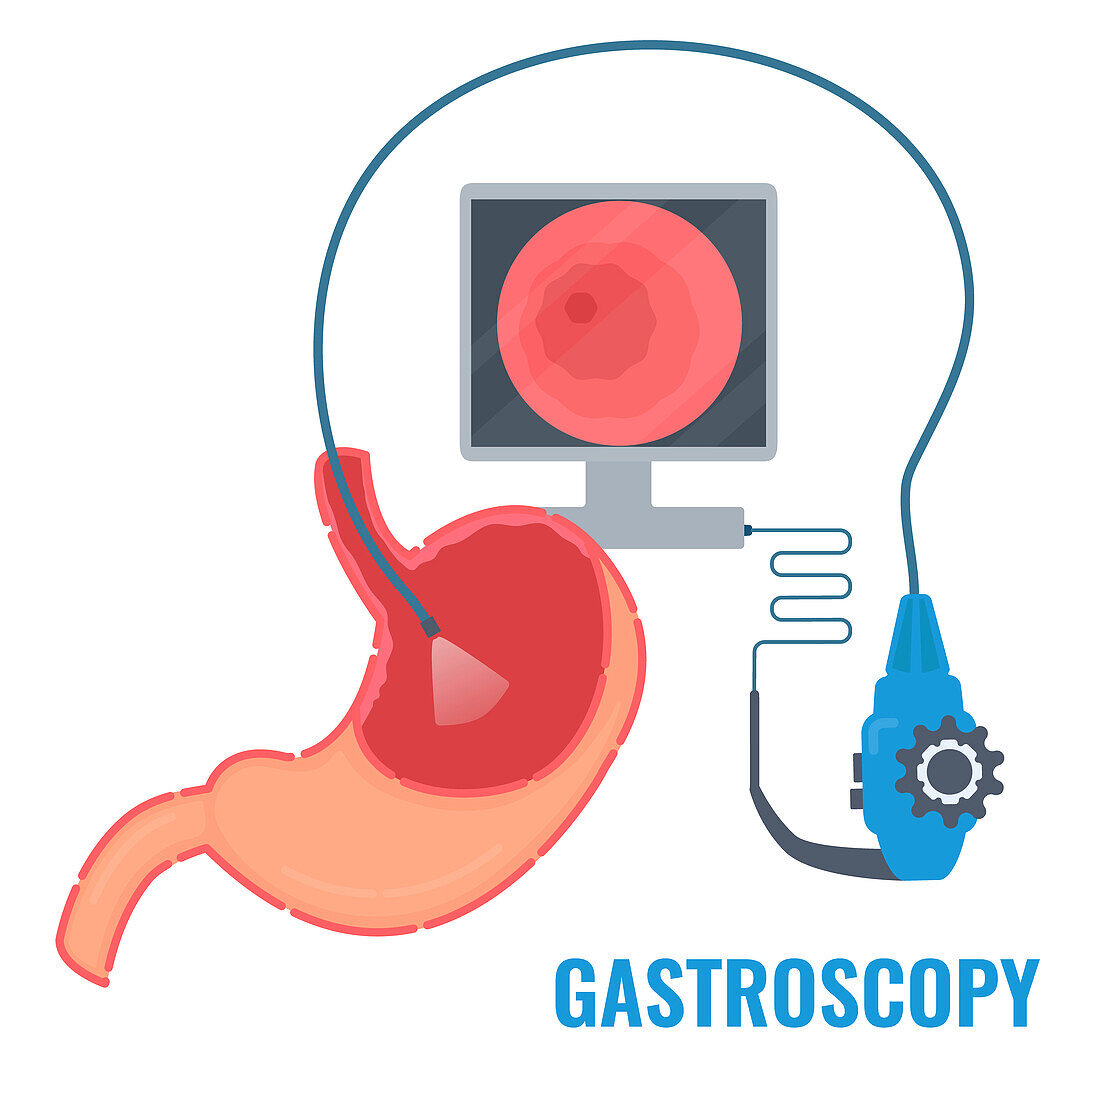 Gastroscopy, conceptual illustration